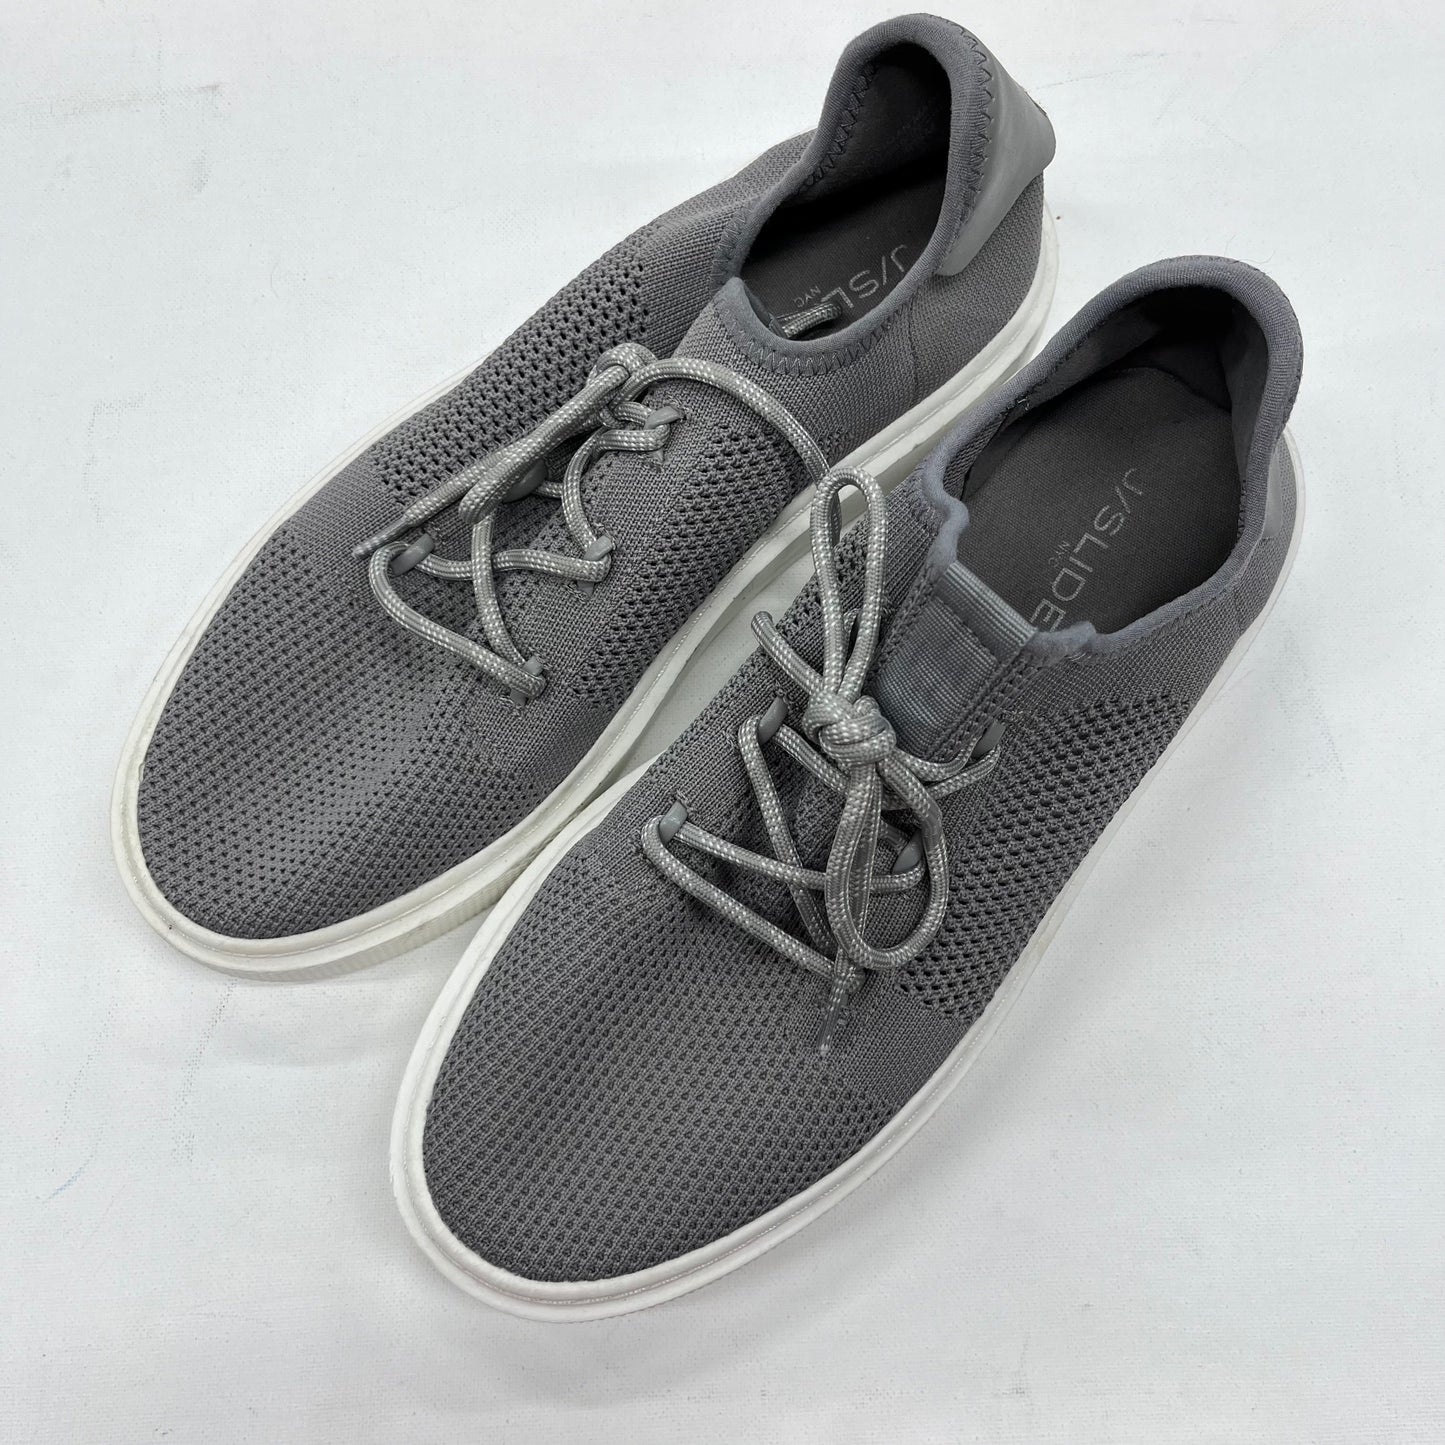 Shoes Flats Loafer Oxford By J Slides  Size: 9.5